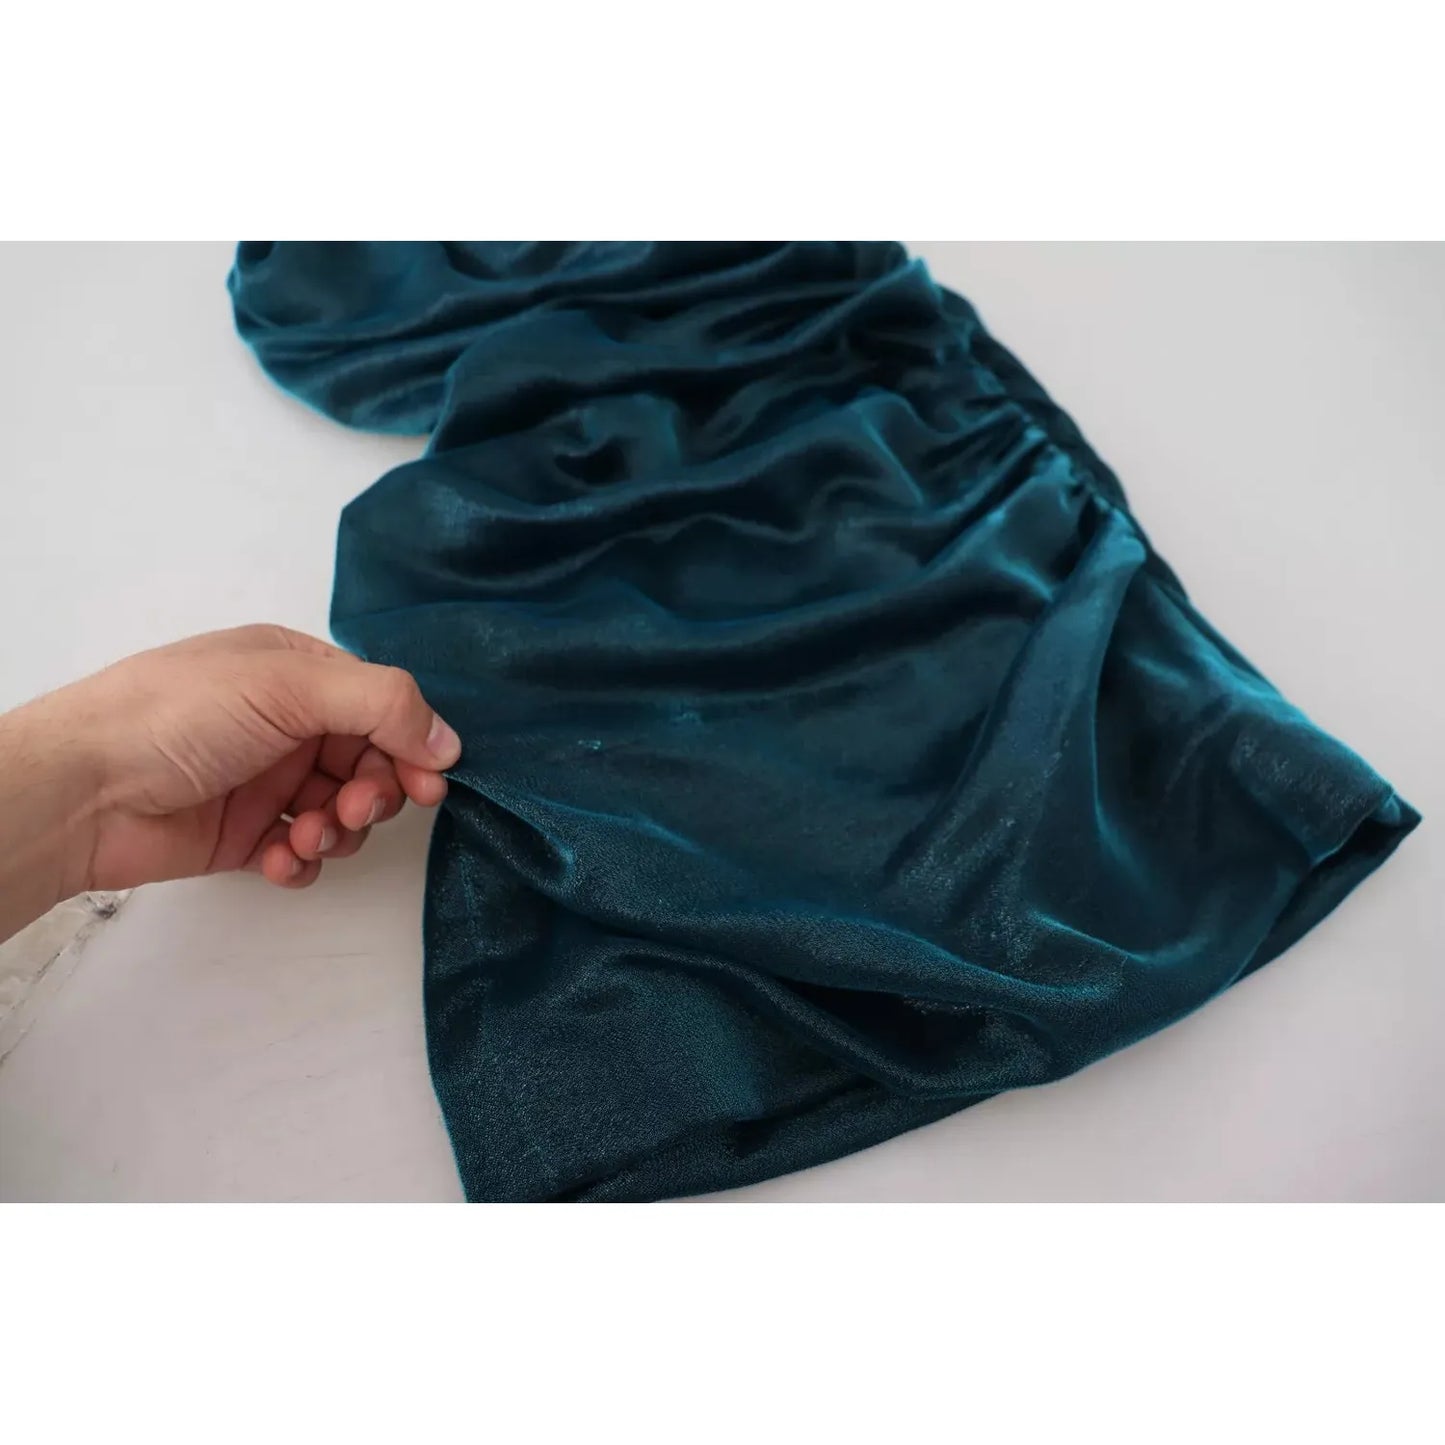 Silk Blend Blue Satin Fitted Strapless Dress